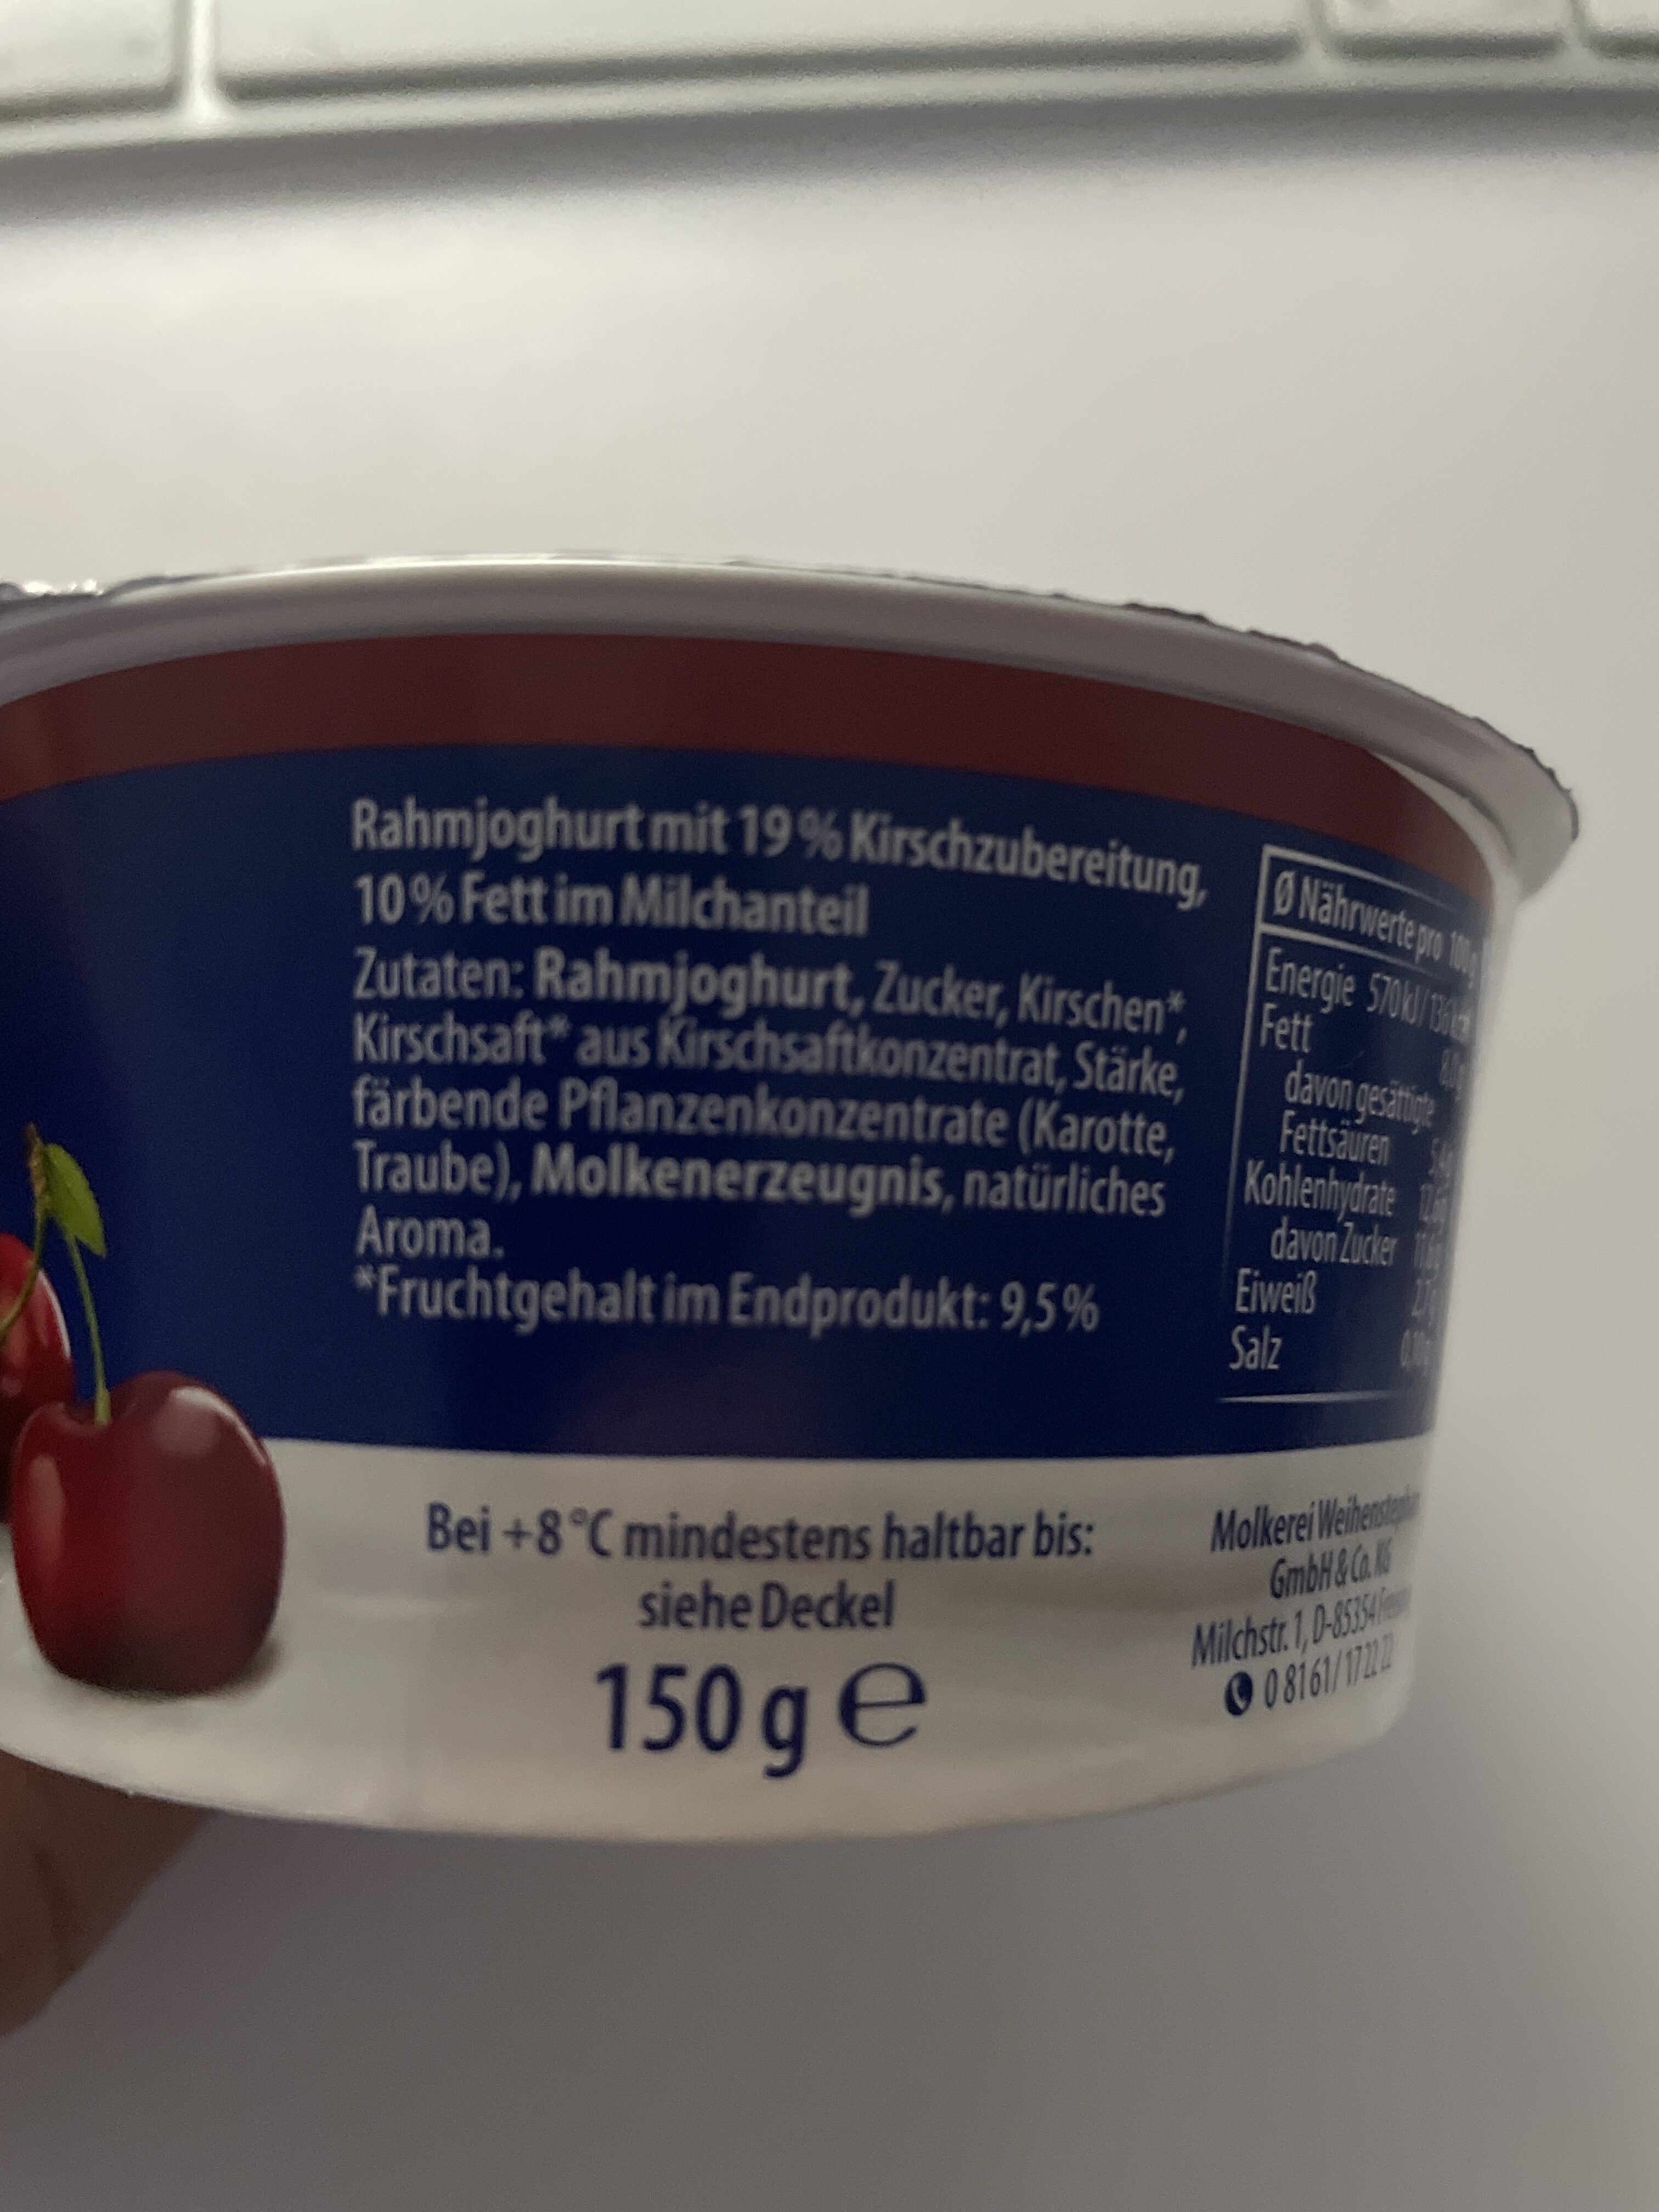 Rahmjoghurt Kirsche - Ingredienser - de